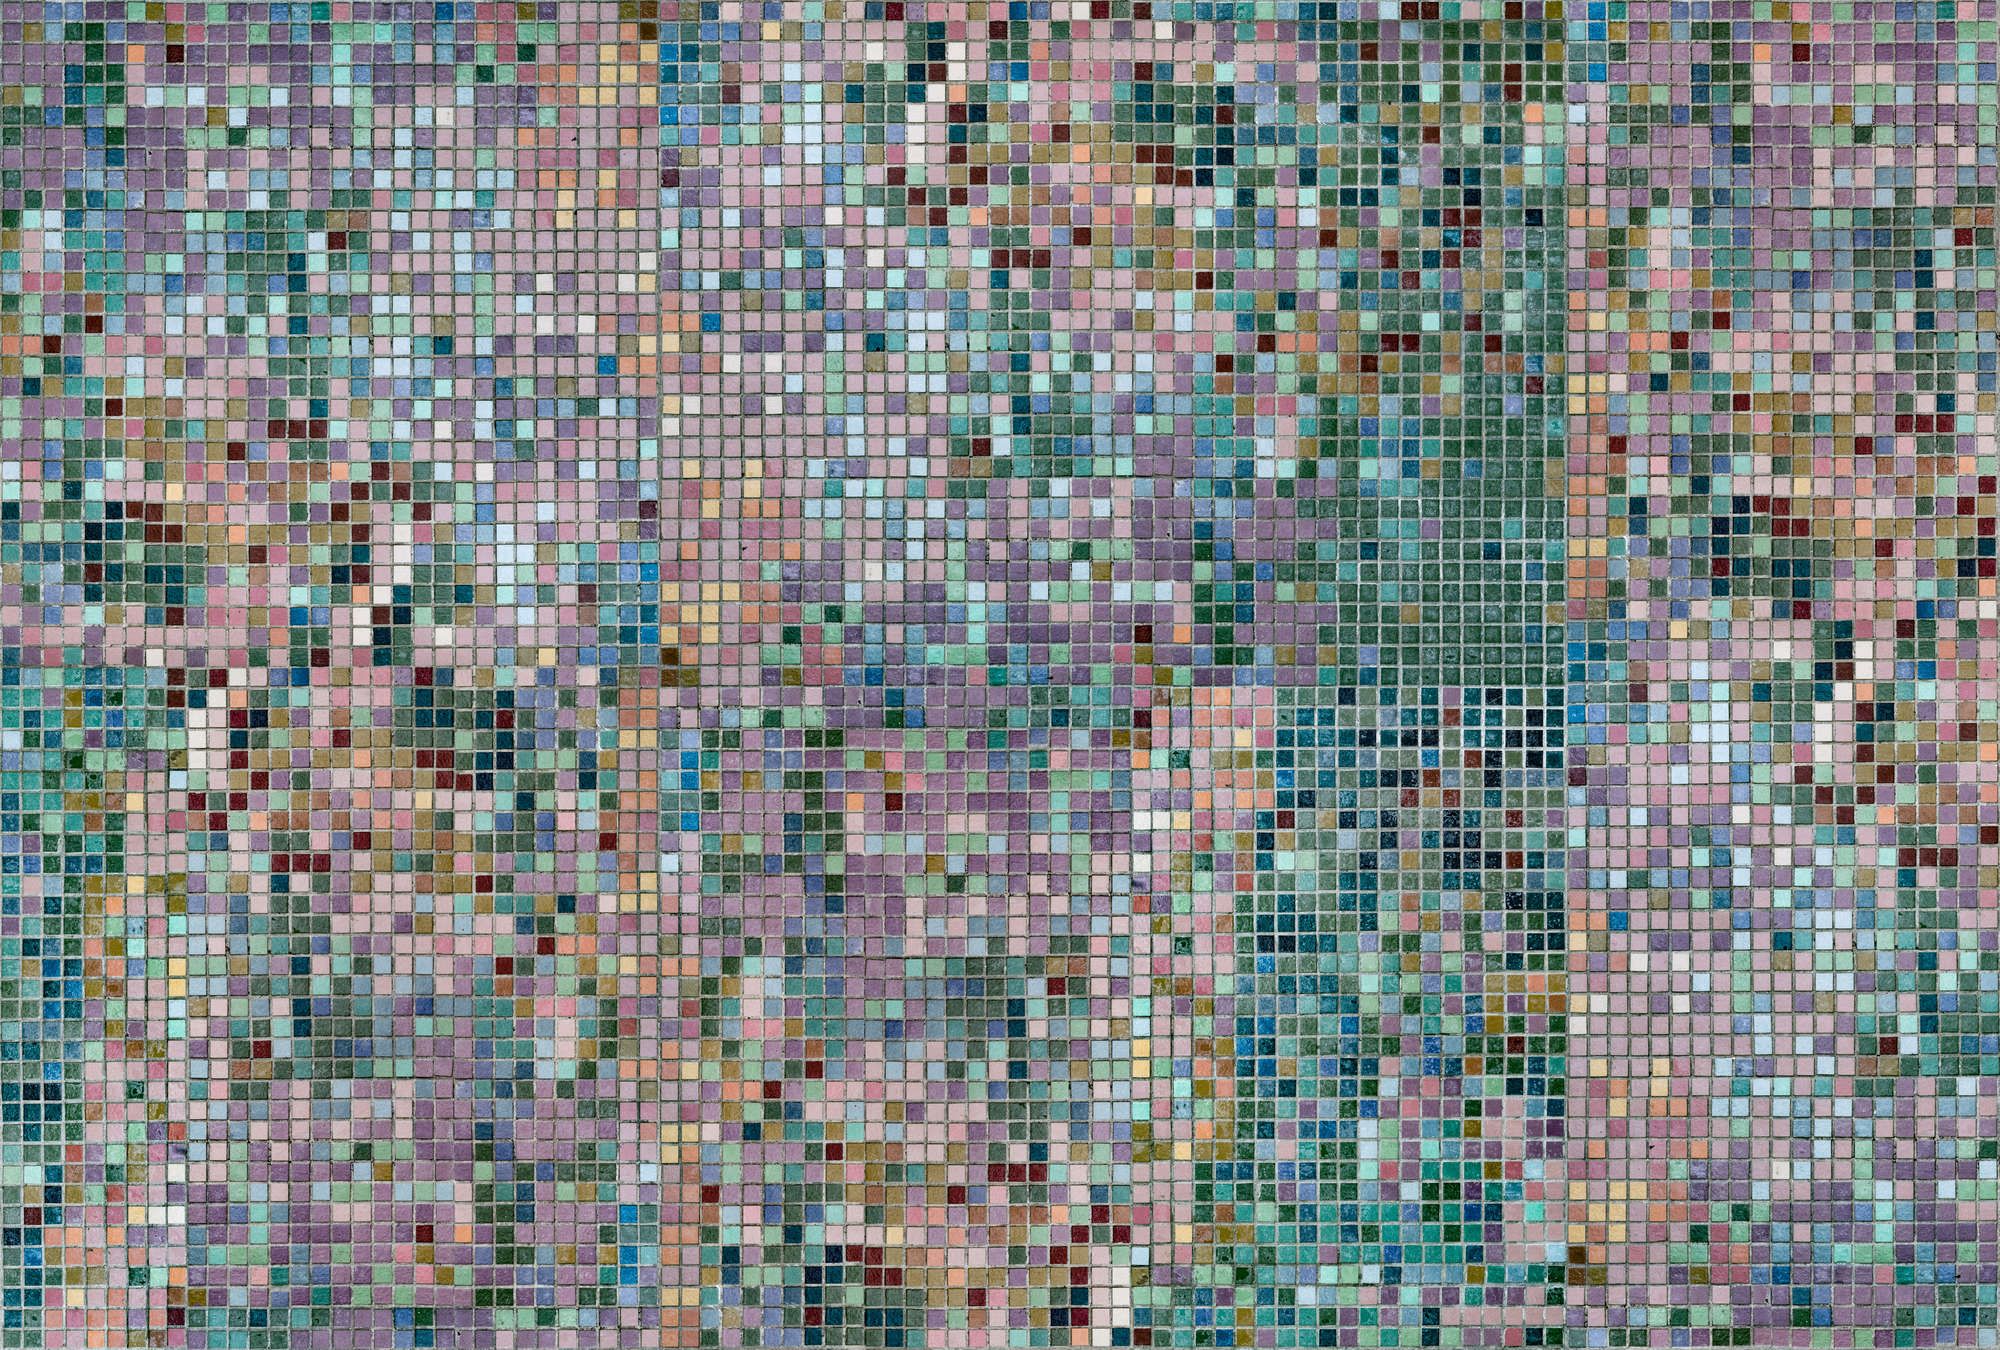             Digital behang »grand central« - Mozaïekpatroon in heldere kleuren - Matte, gladde vliesstof
        